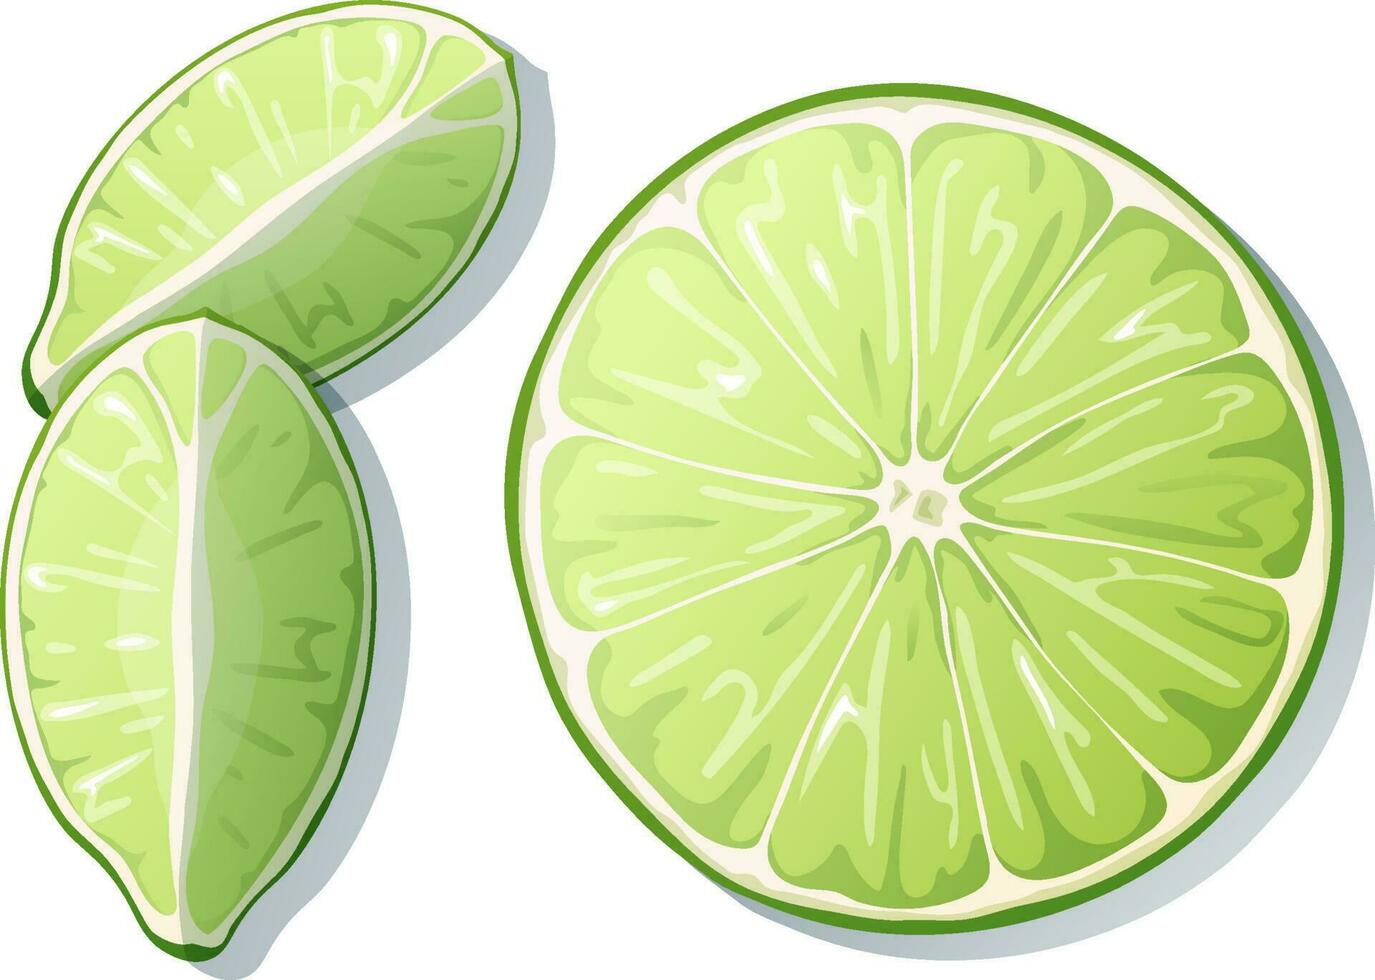 Fresco cortar Lima aislado en blanco antecedentes. verde agrios fruta. vector ilustración de Lima rebanada